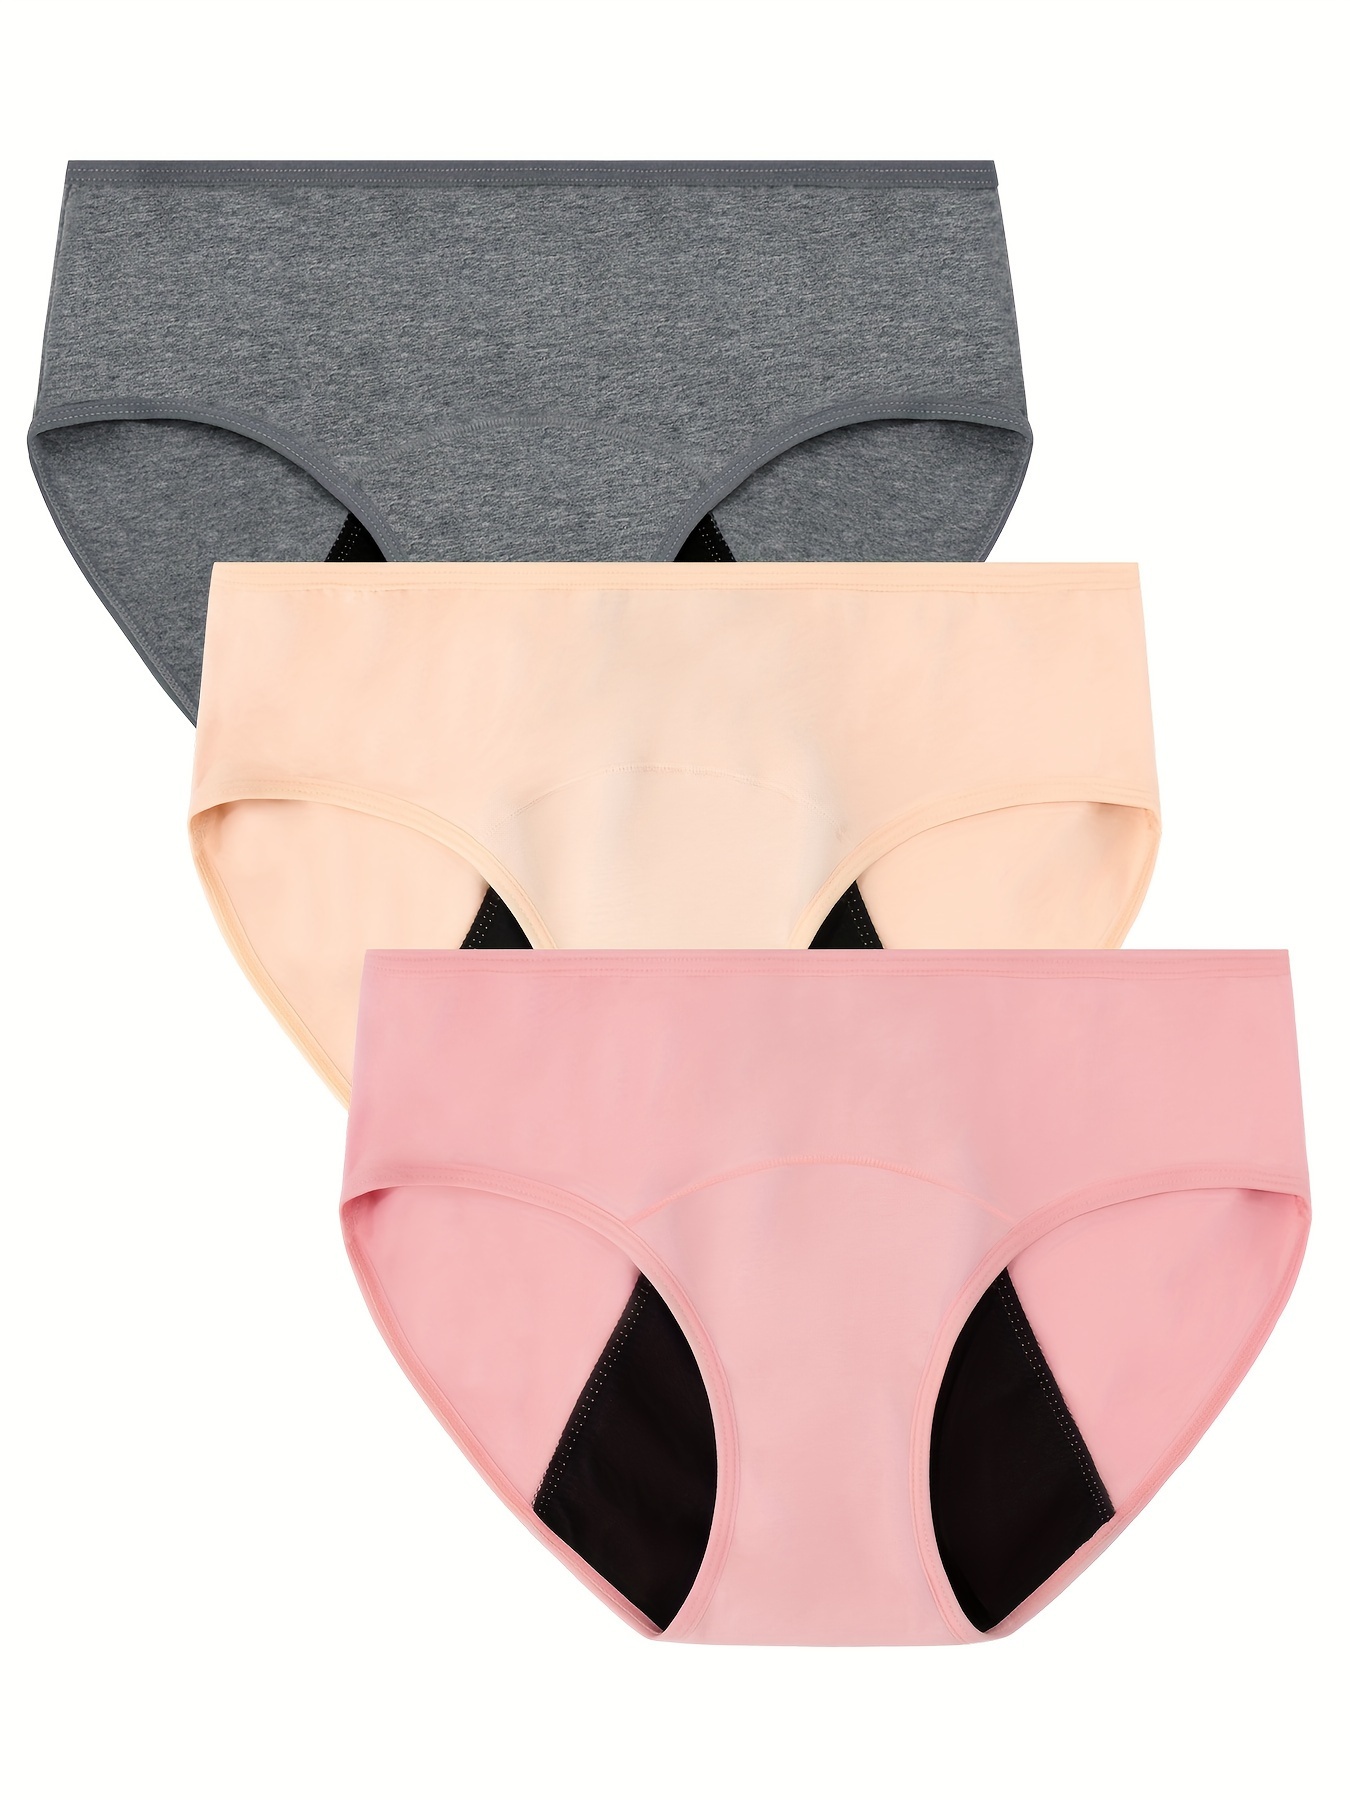 Women's Cotton Mid Waist Comfort Panty Briefs / Hipster Innerwear